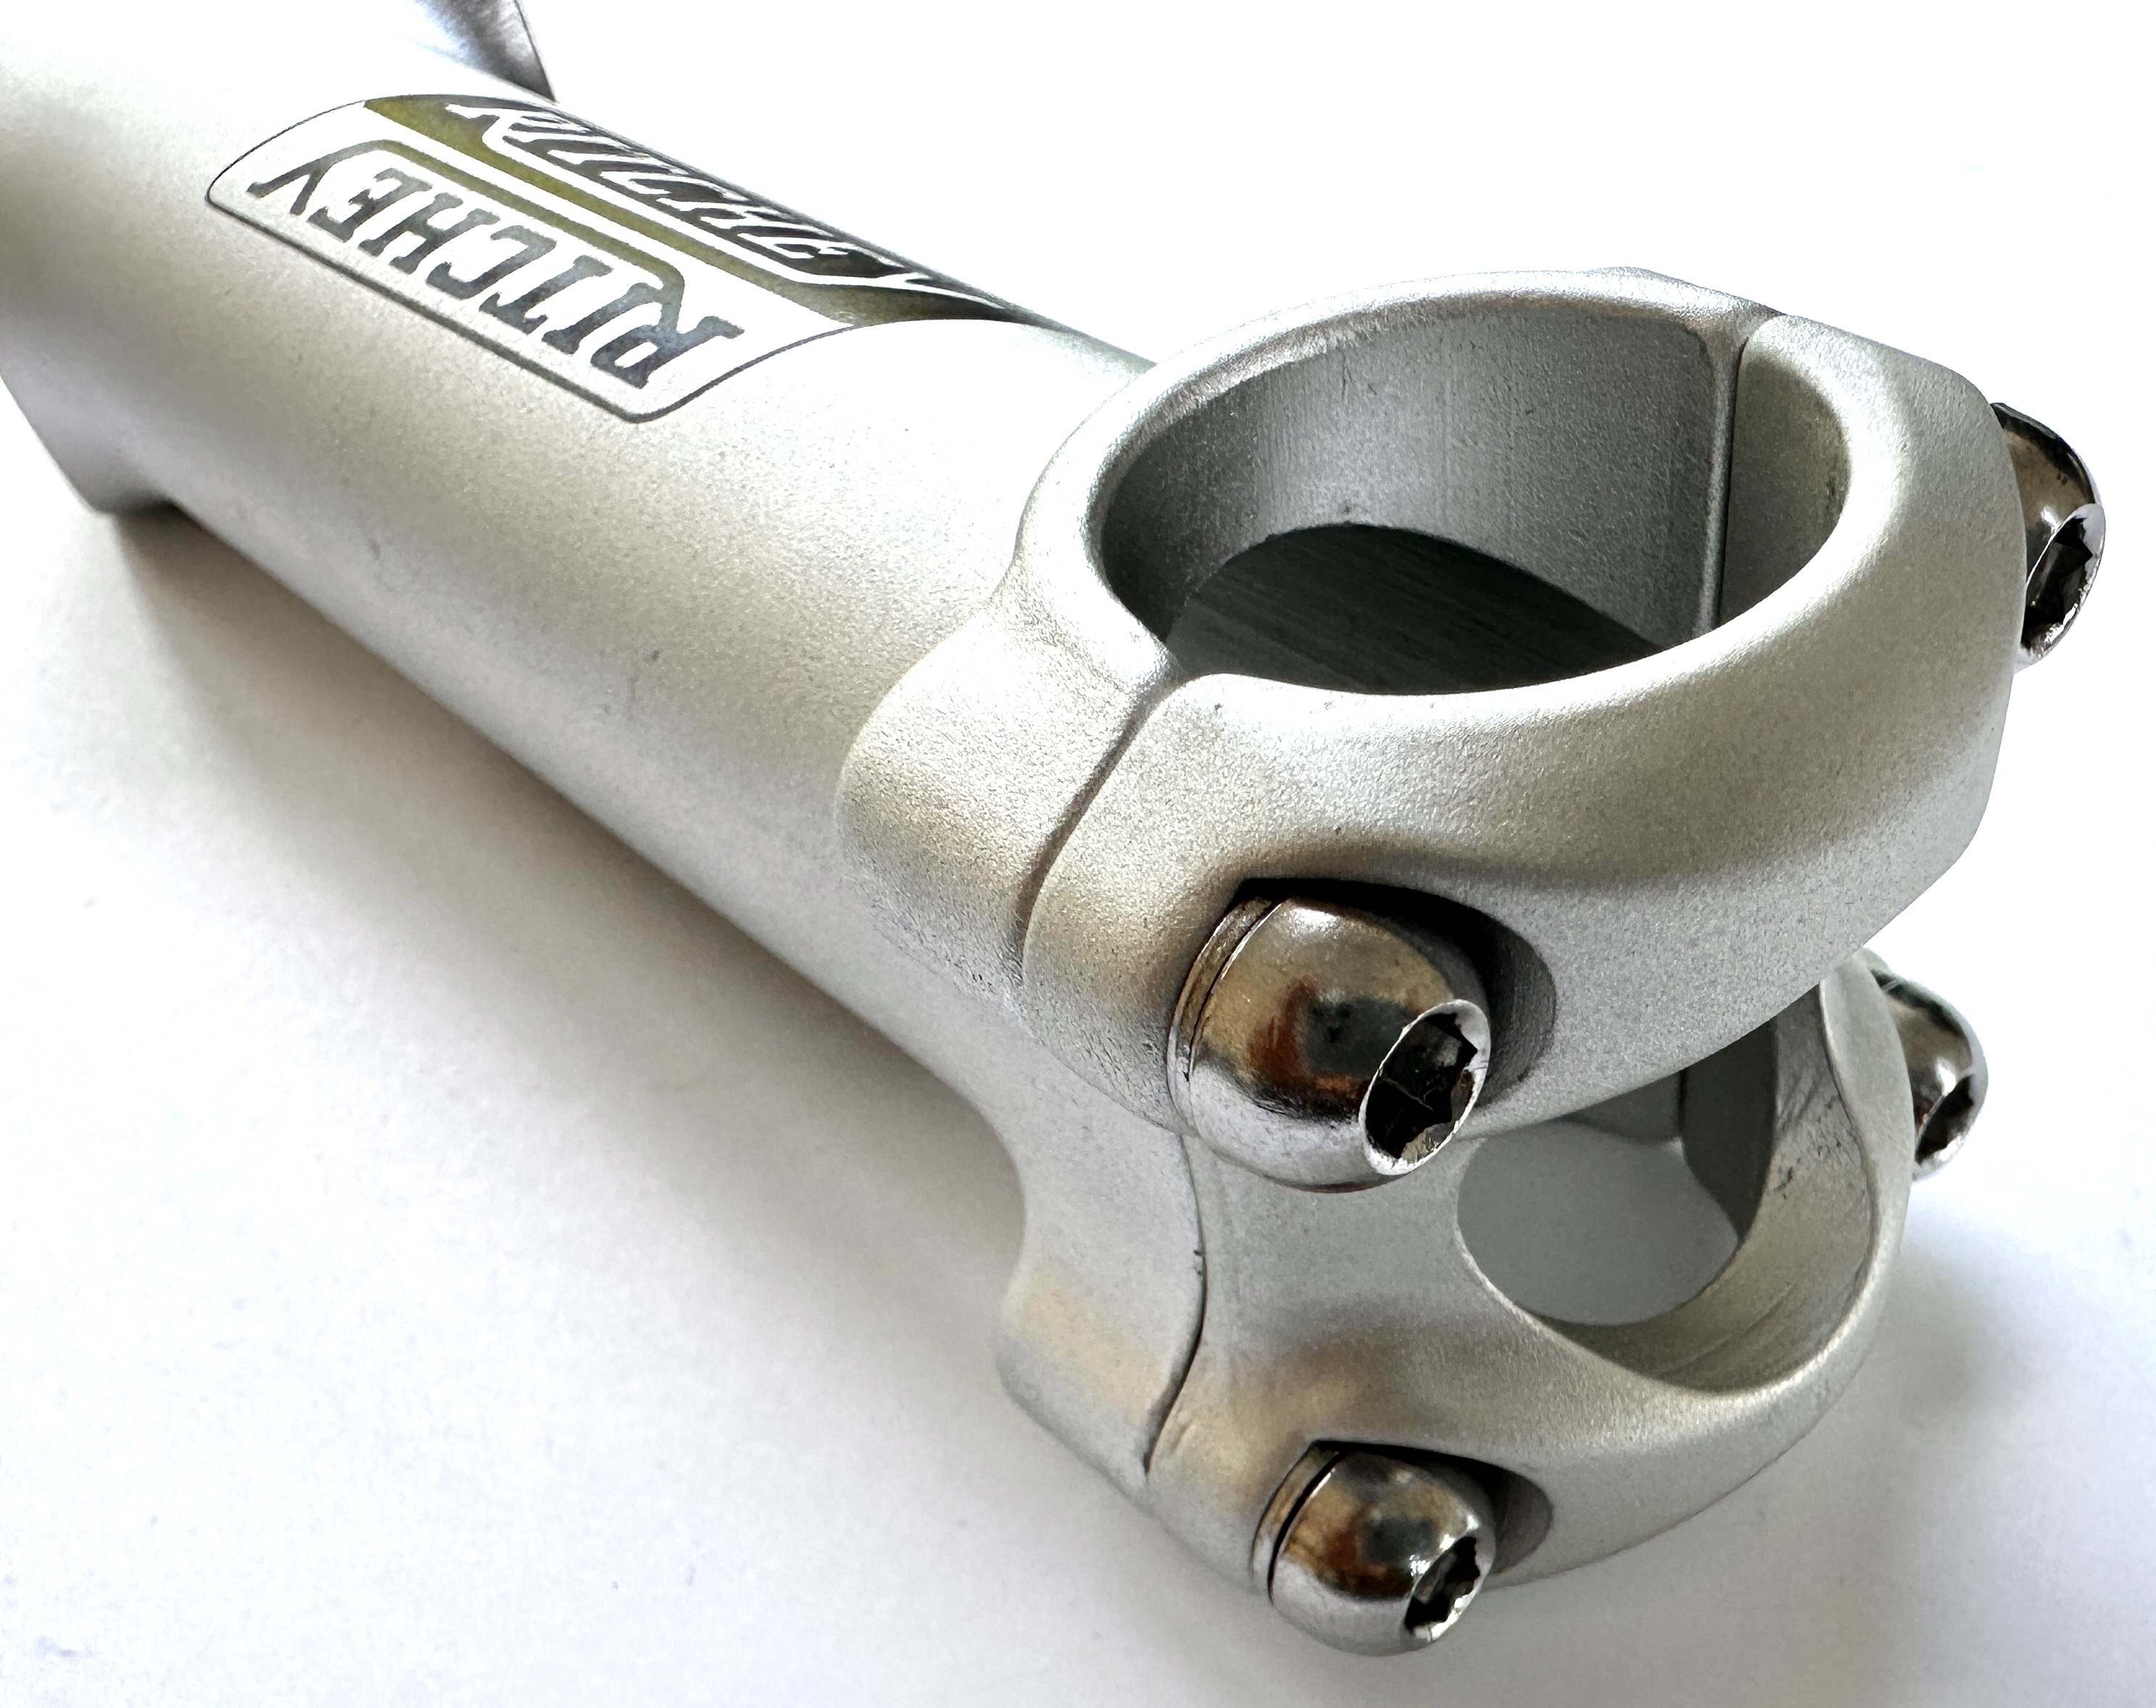 Ritchey Pro Potencia Potencia de aluminio: montaje en manillar de 1 1/8 1 pulgada Conexión de tornillo de 4 vías